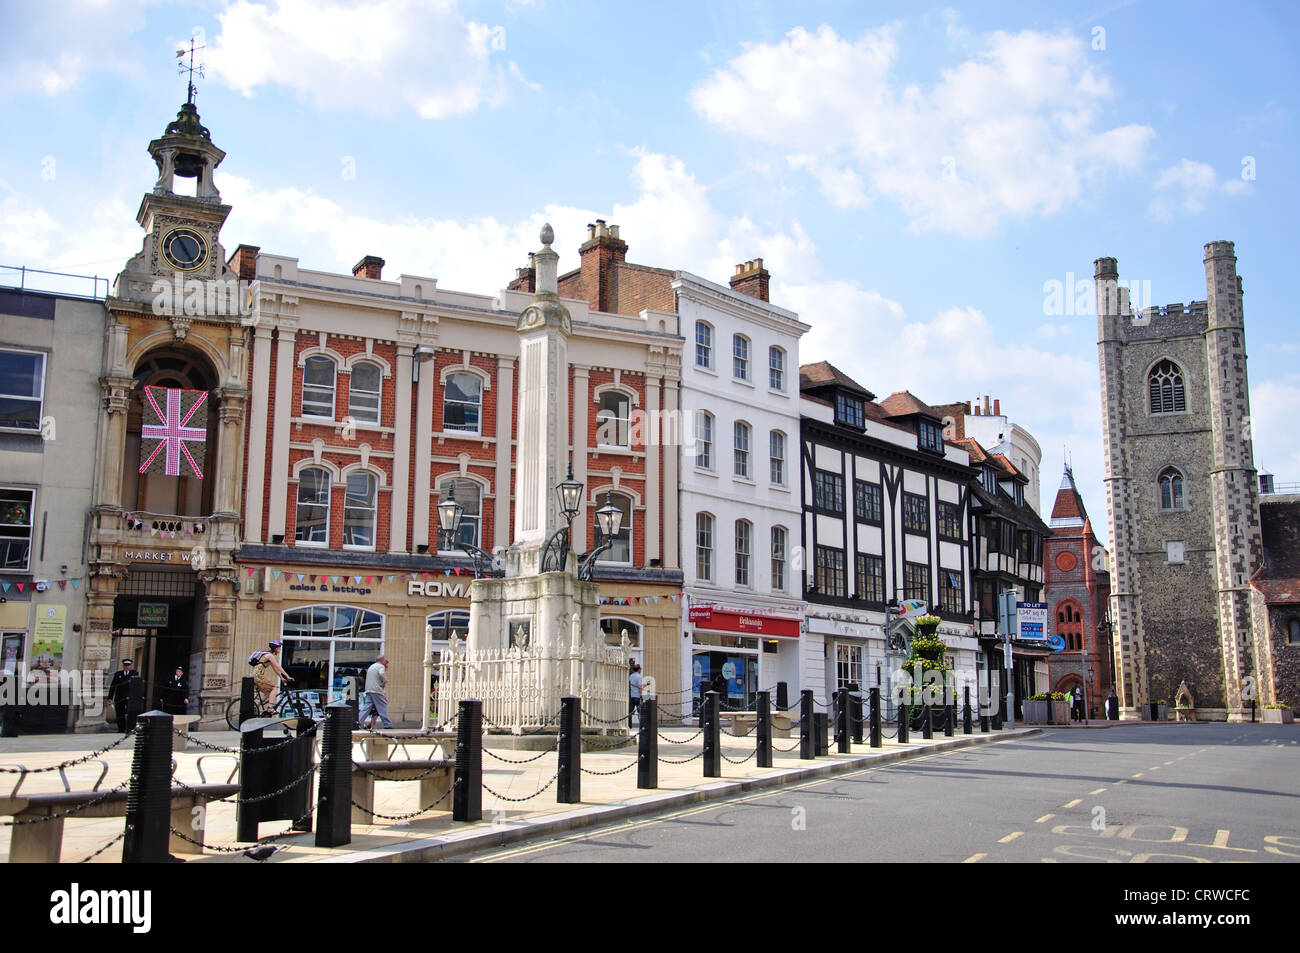 Market Place, High Street, Reading, Berkshire, England, United Kingdom Stock Photo